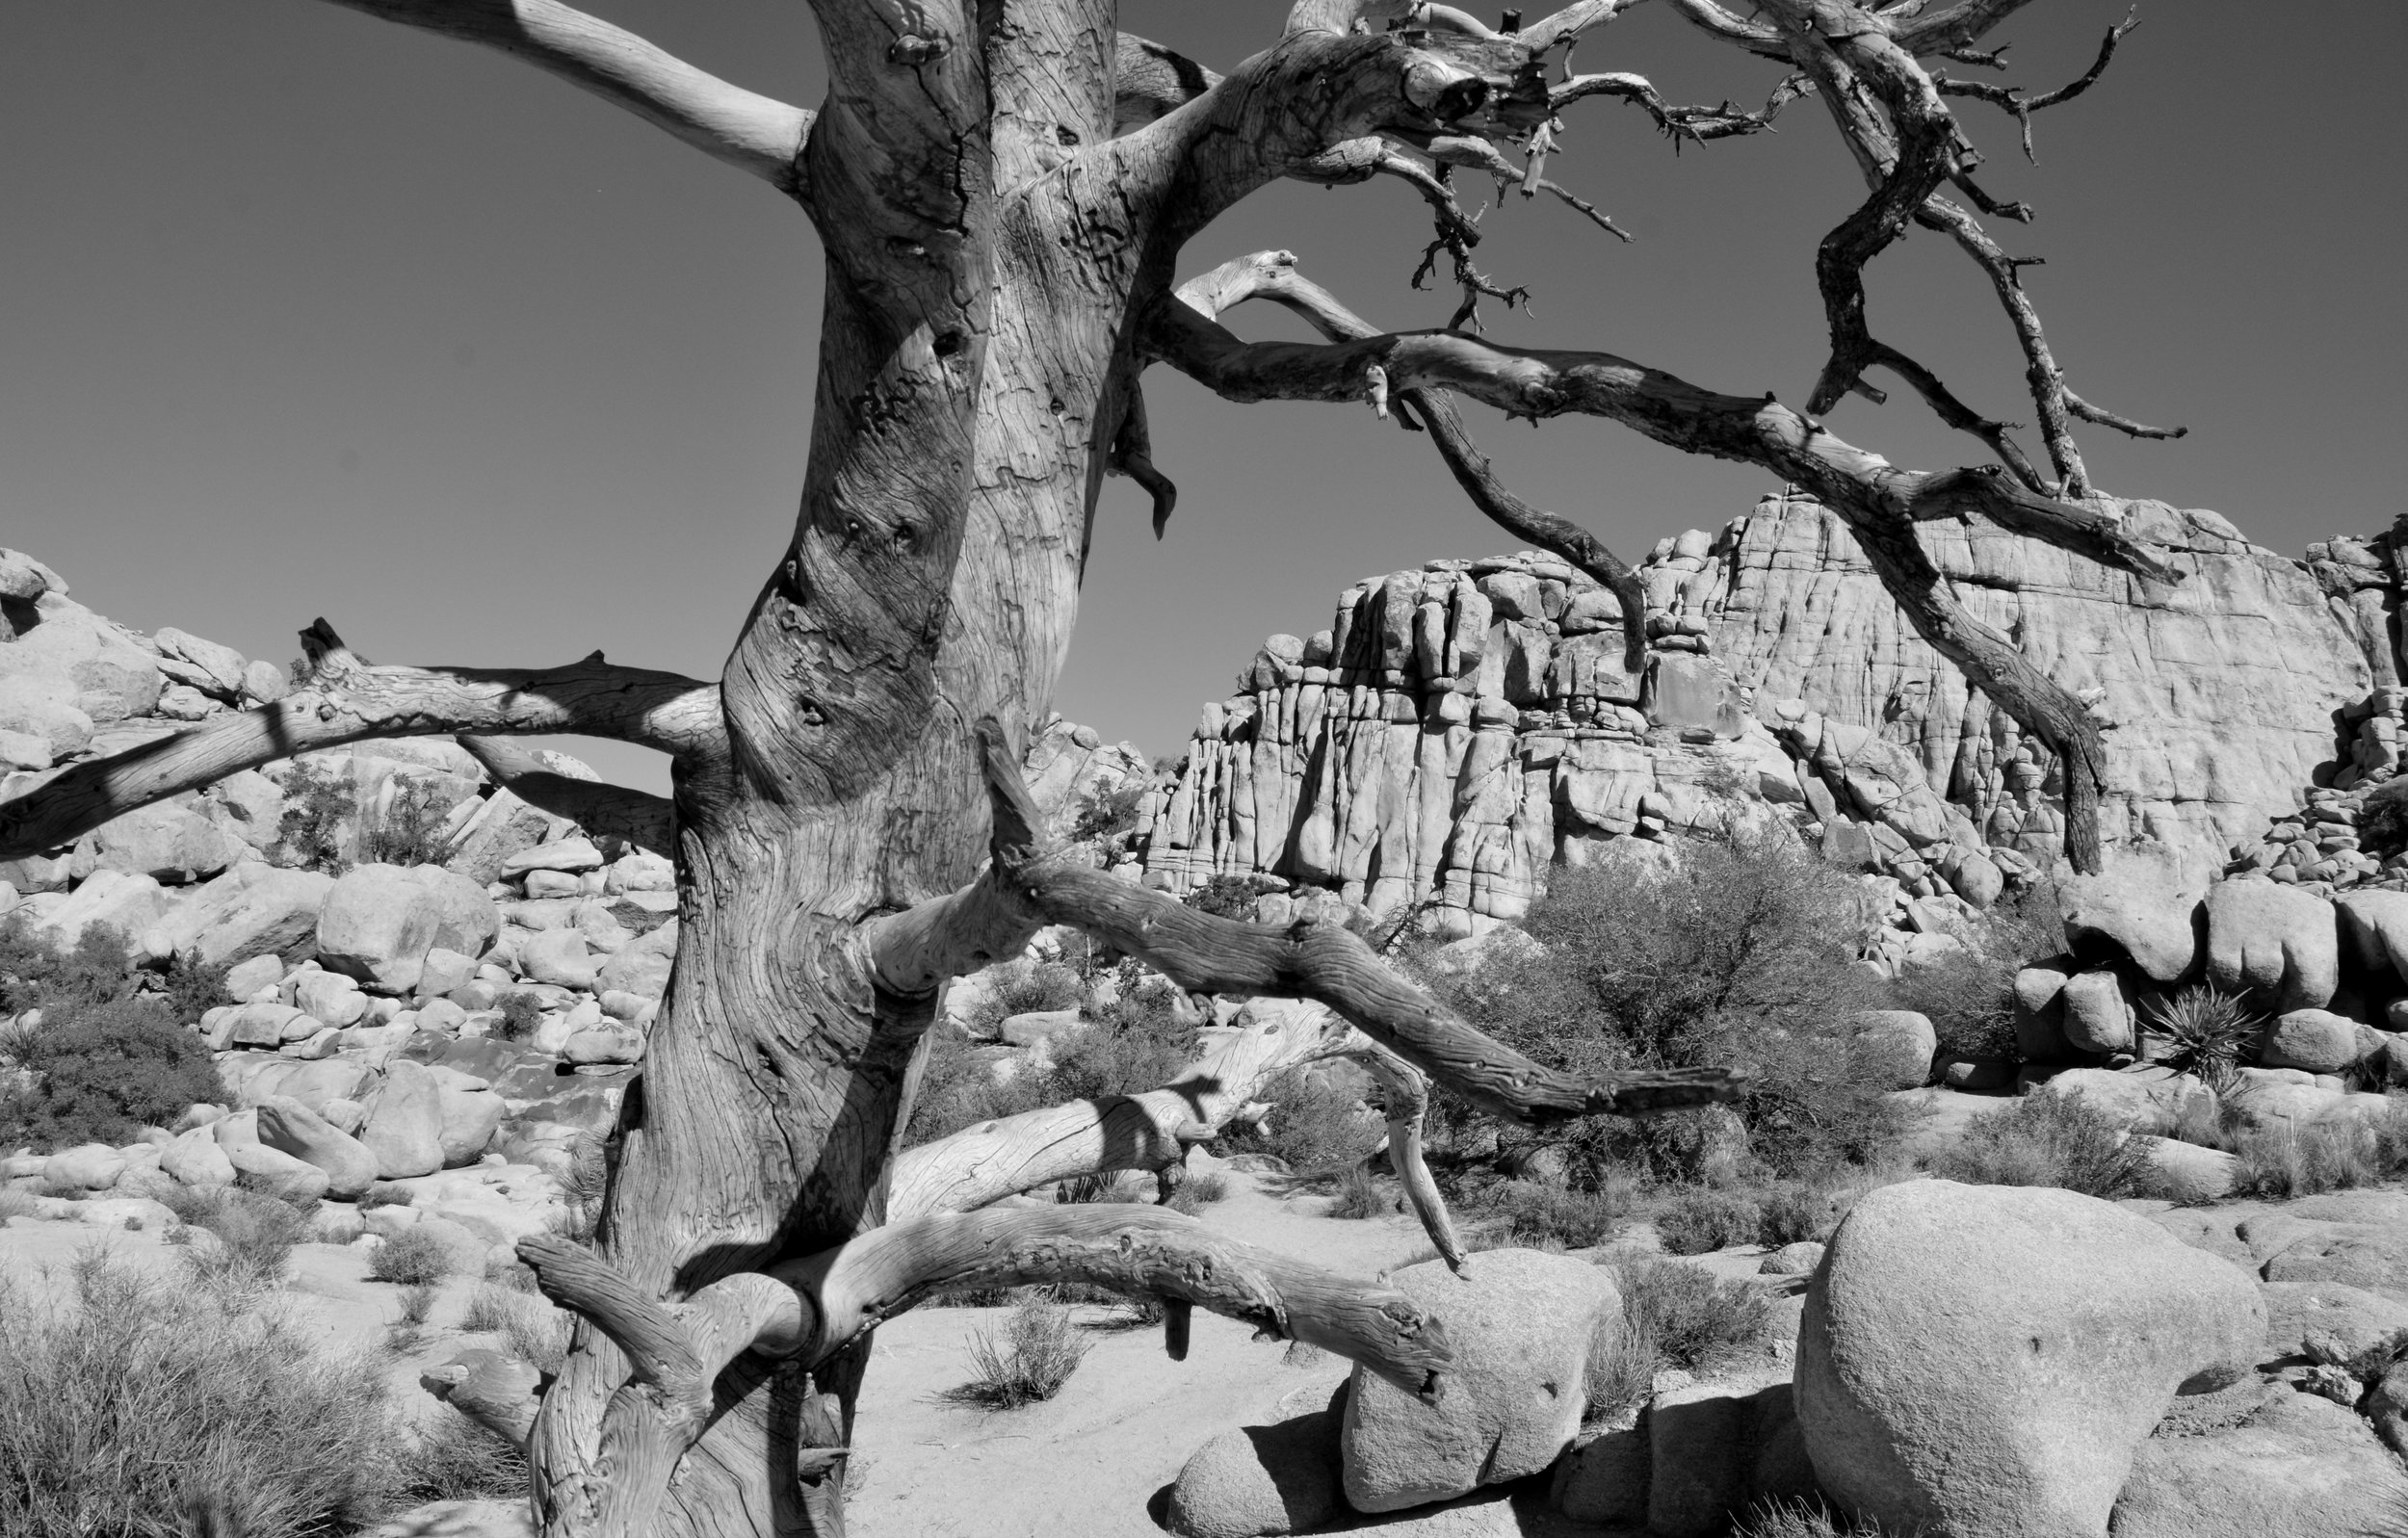 Joshua Tree National Park, Arizona, U.S.A.